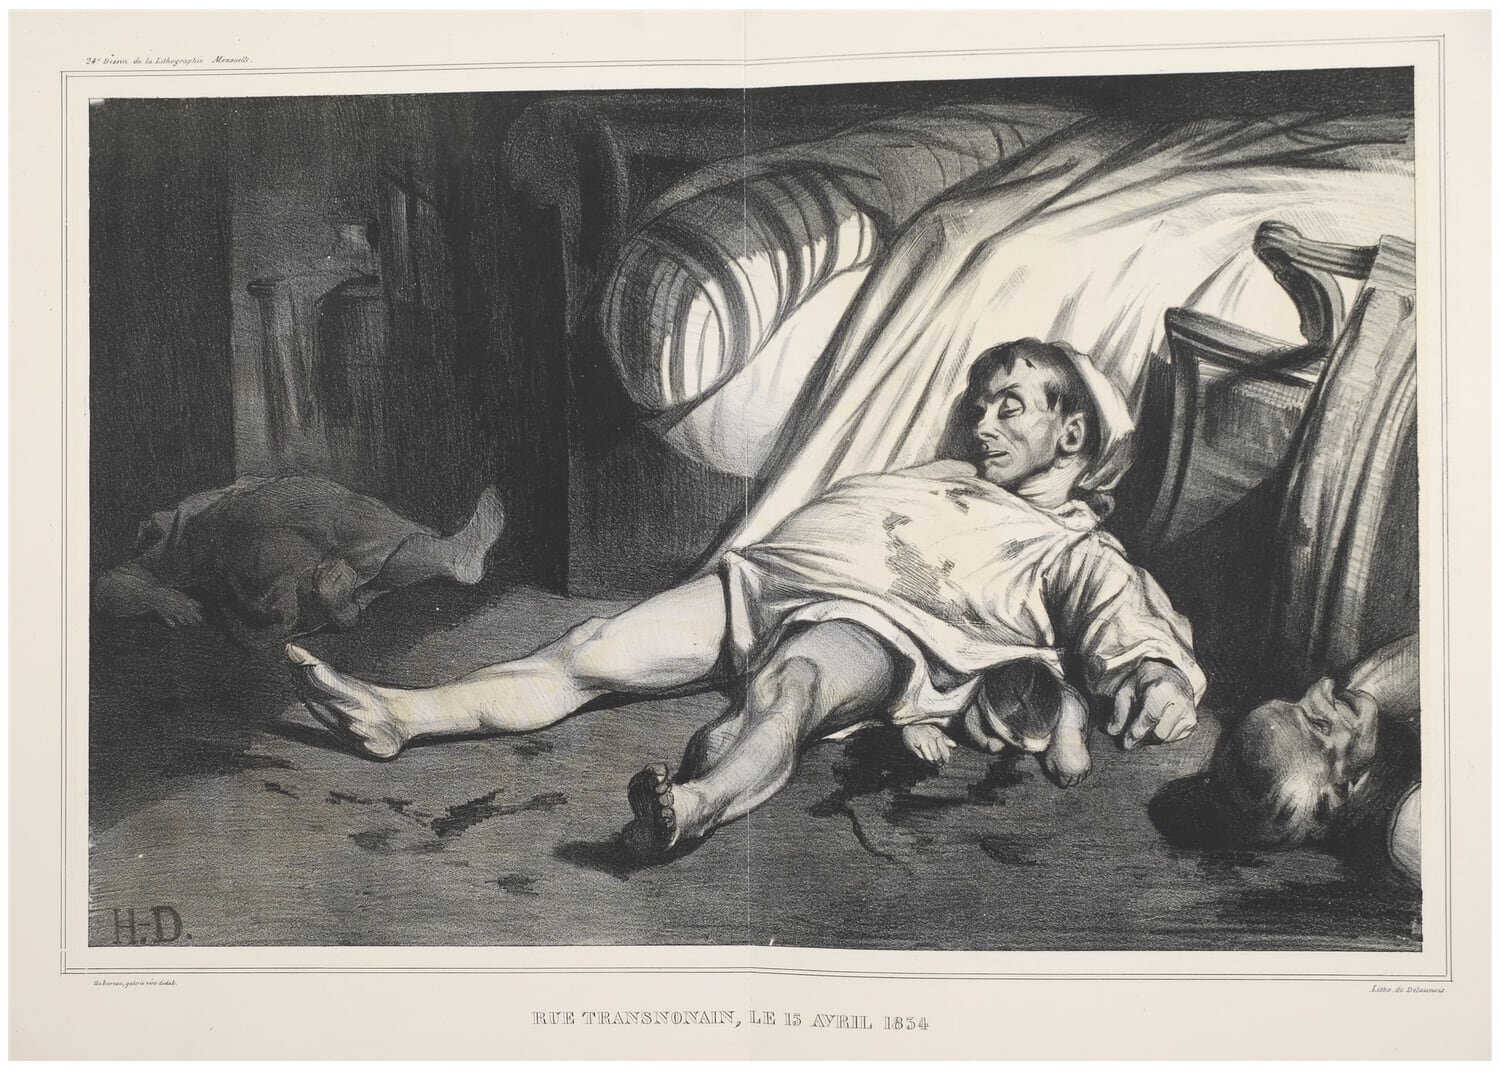  Daumier’s  Rue Transnonain  and  Le ventre législatif , both from 1834 